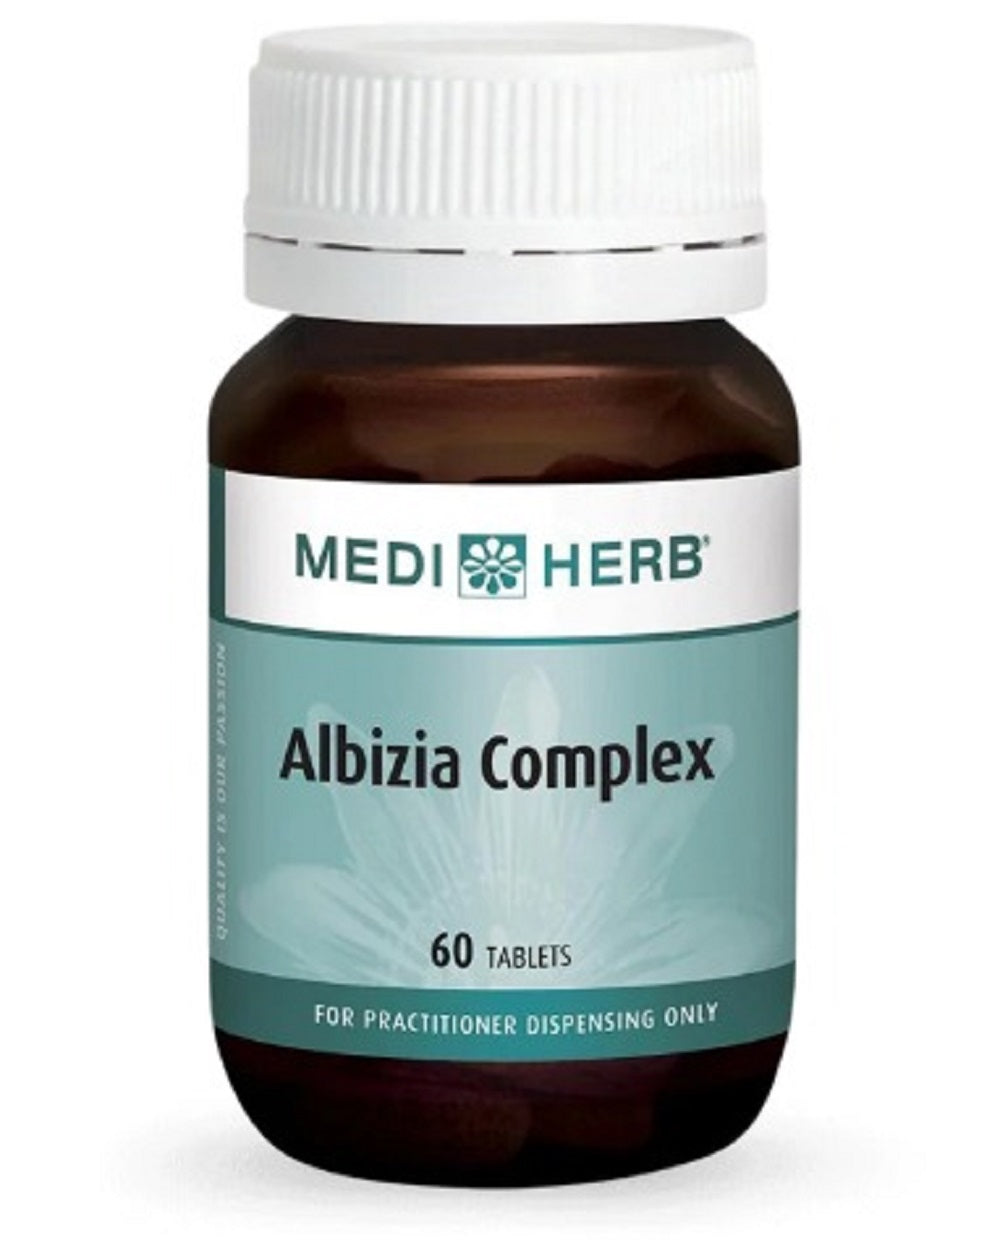 MediHerb Albizia Complex 60 Tablets